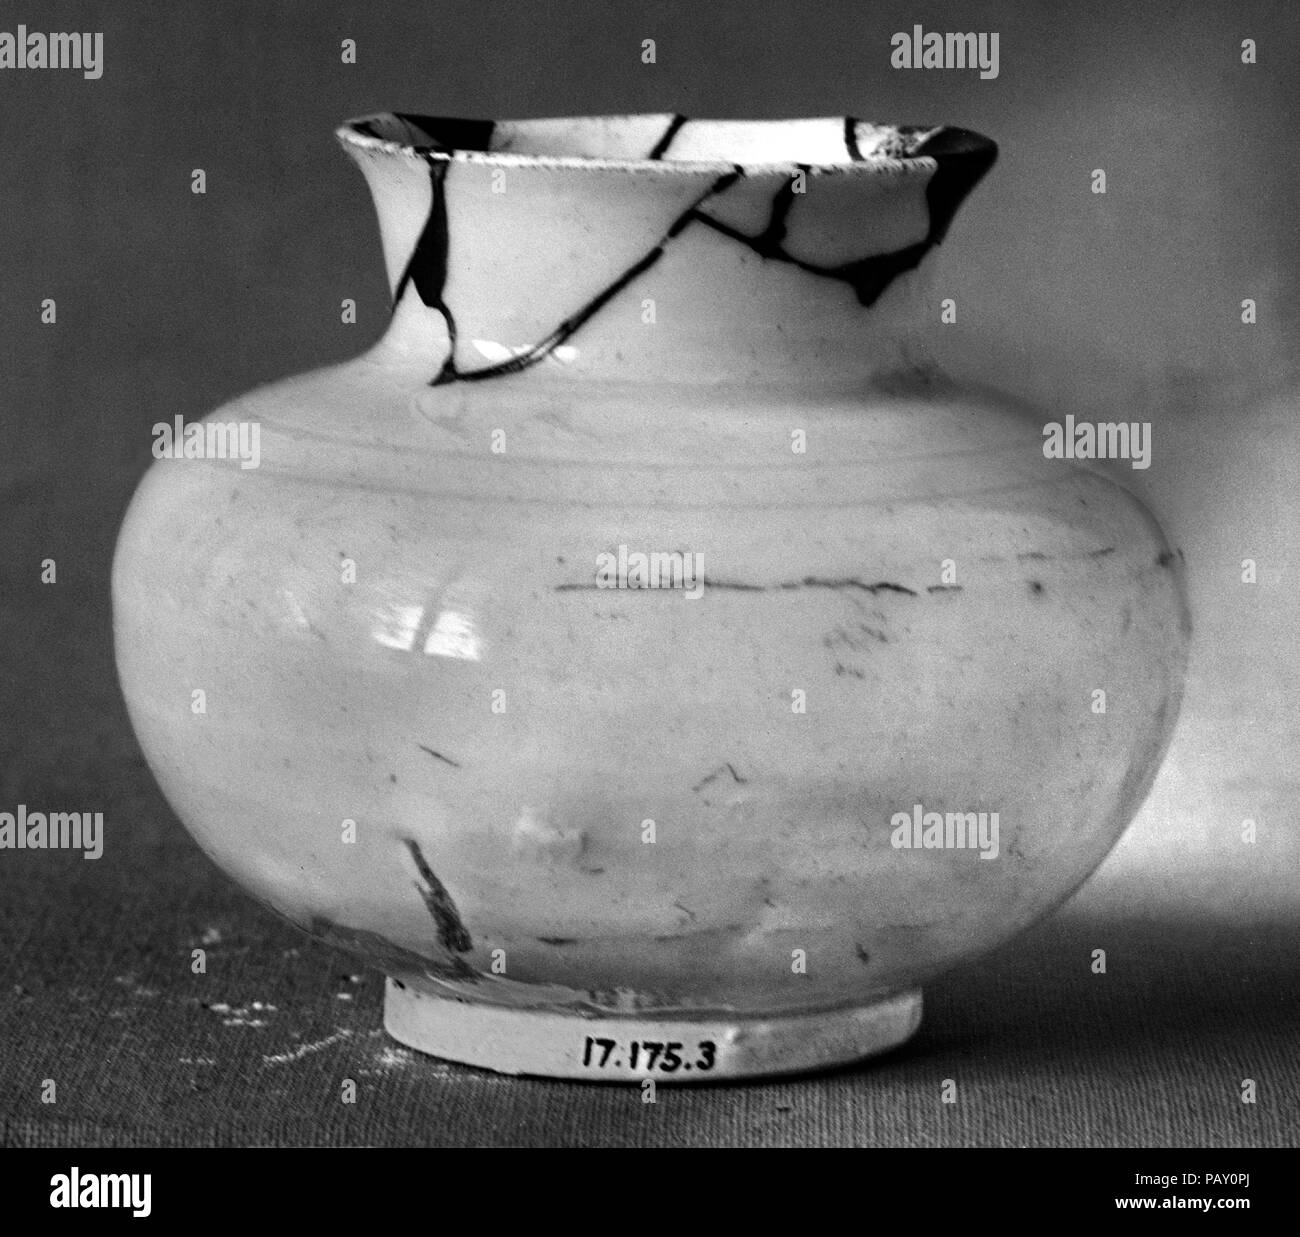 Pot. Culture: Korea. Dimensions: H. 2 3/8 in. (6 cm); Diam. 2 1/2 in. (6.4 cm). Museum: Metropolitan Museum of Art, New York, USA. Stock Photo